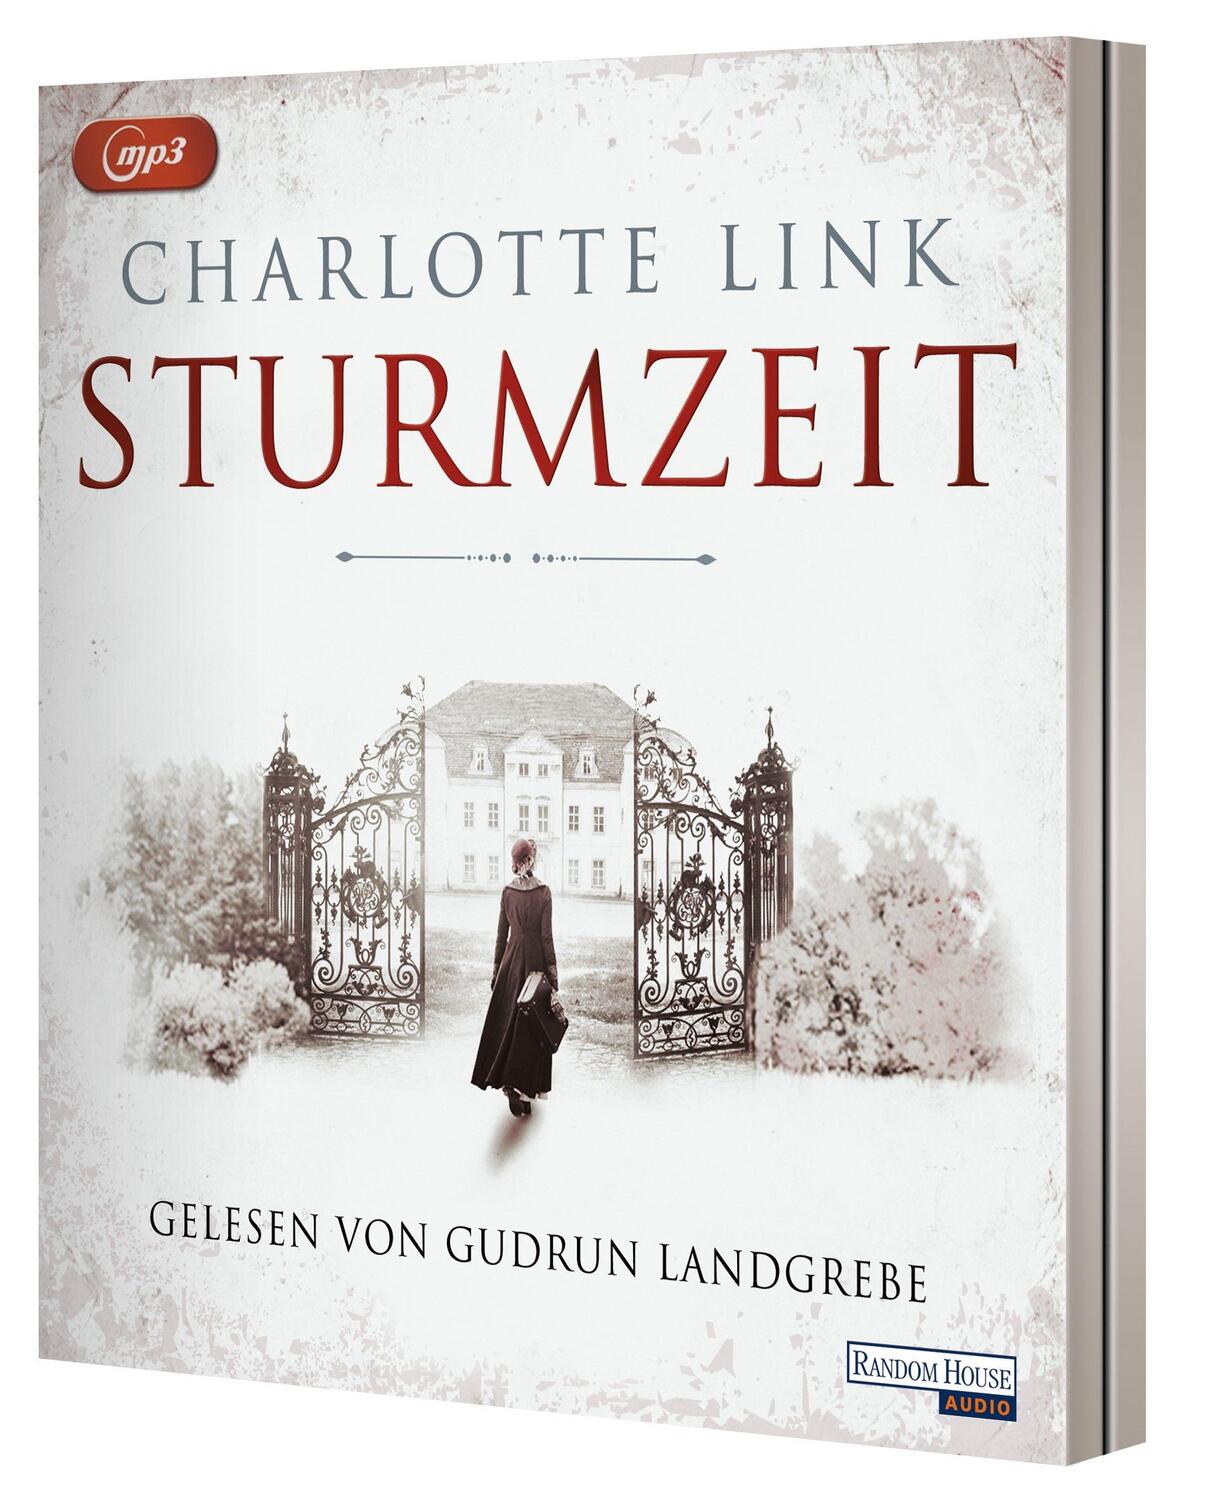 Bild: 9783837141511 | Sturmzeit | Charlotte Link | MP3 | Sturmzeit-Trilogie | 470 Min.